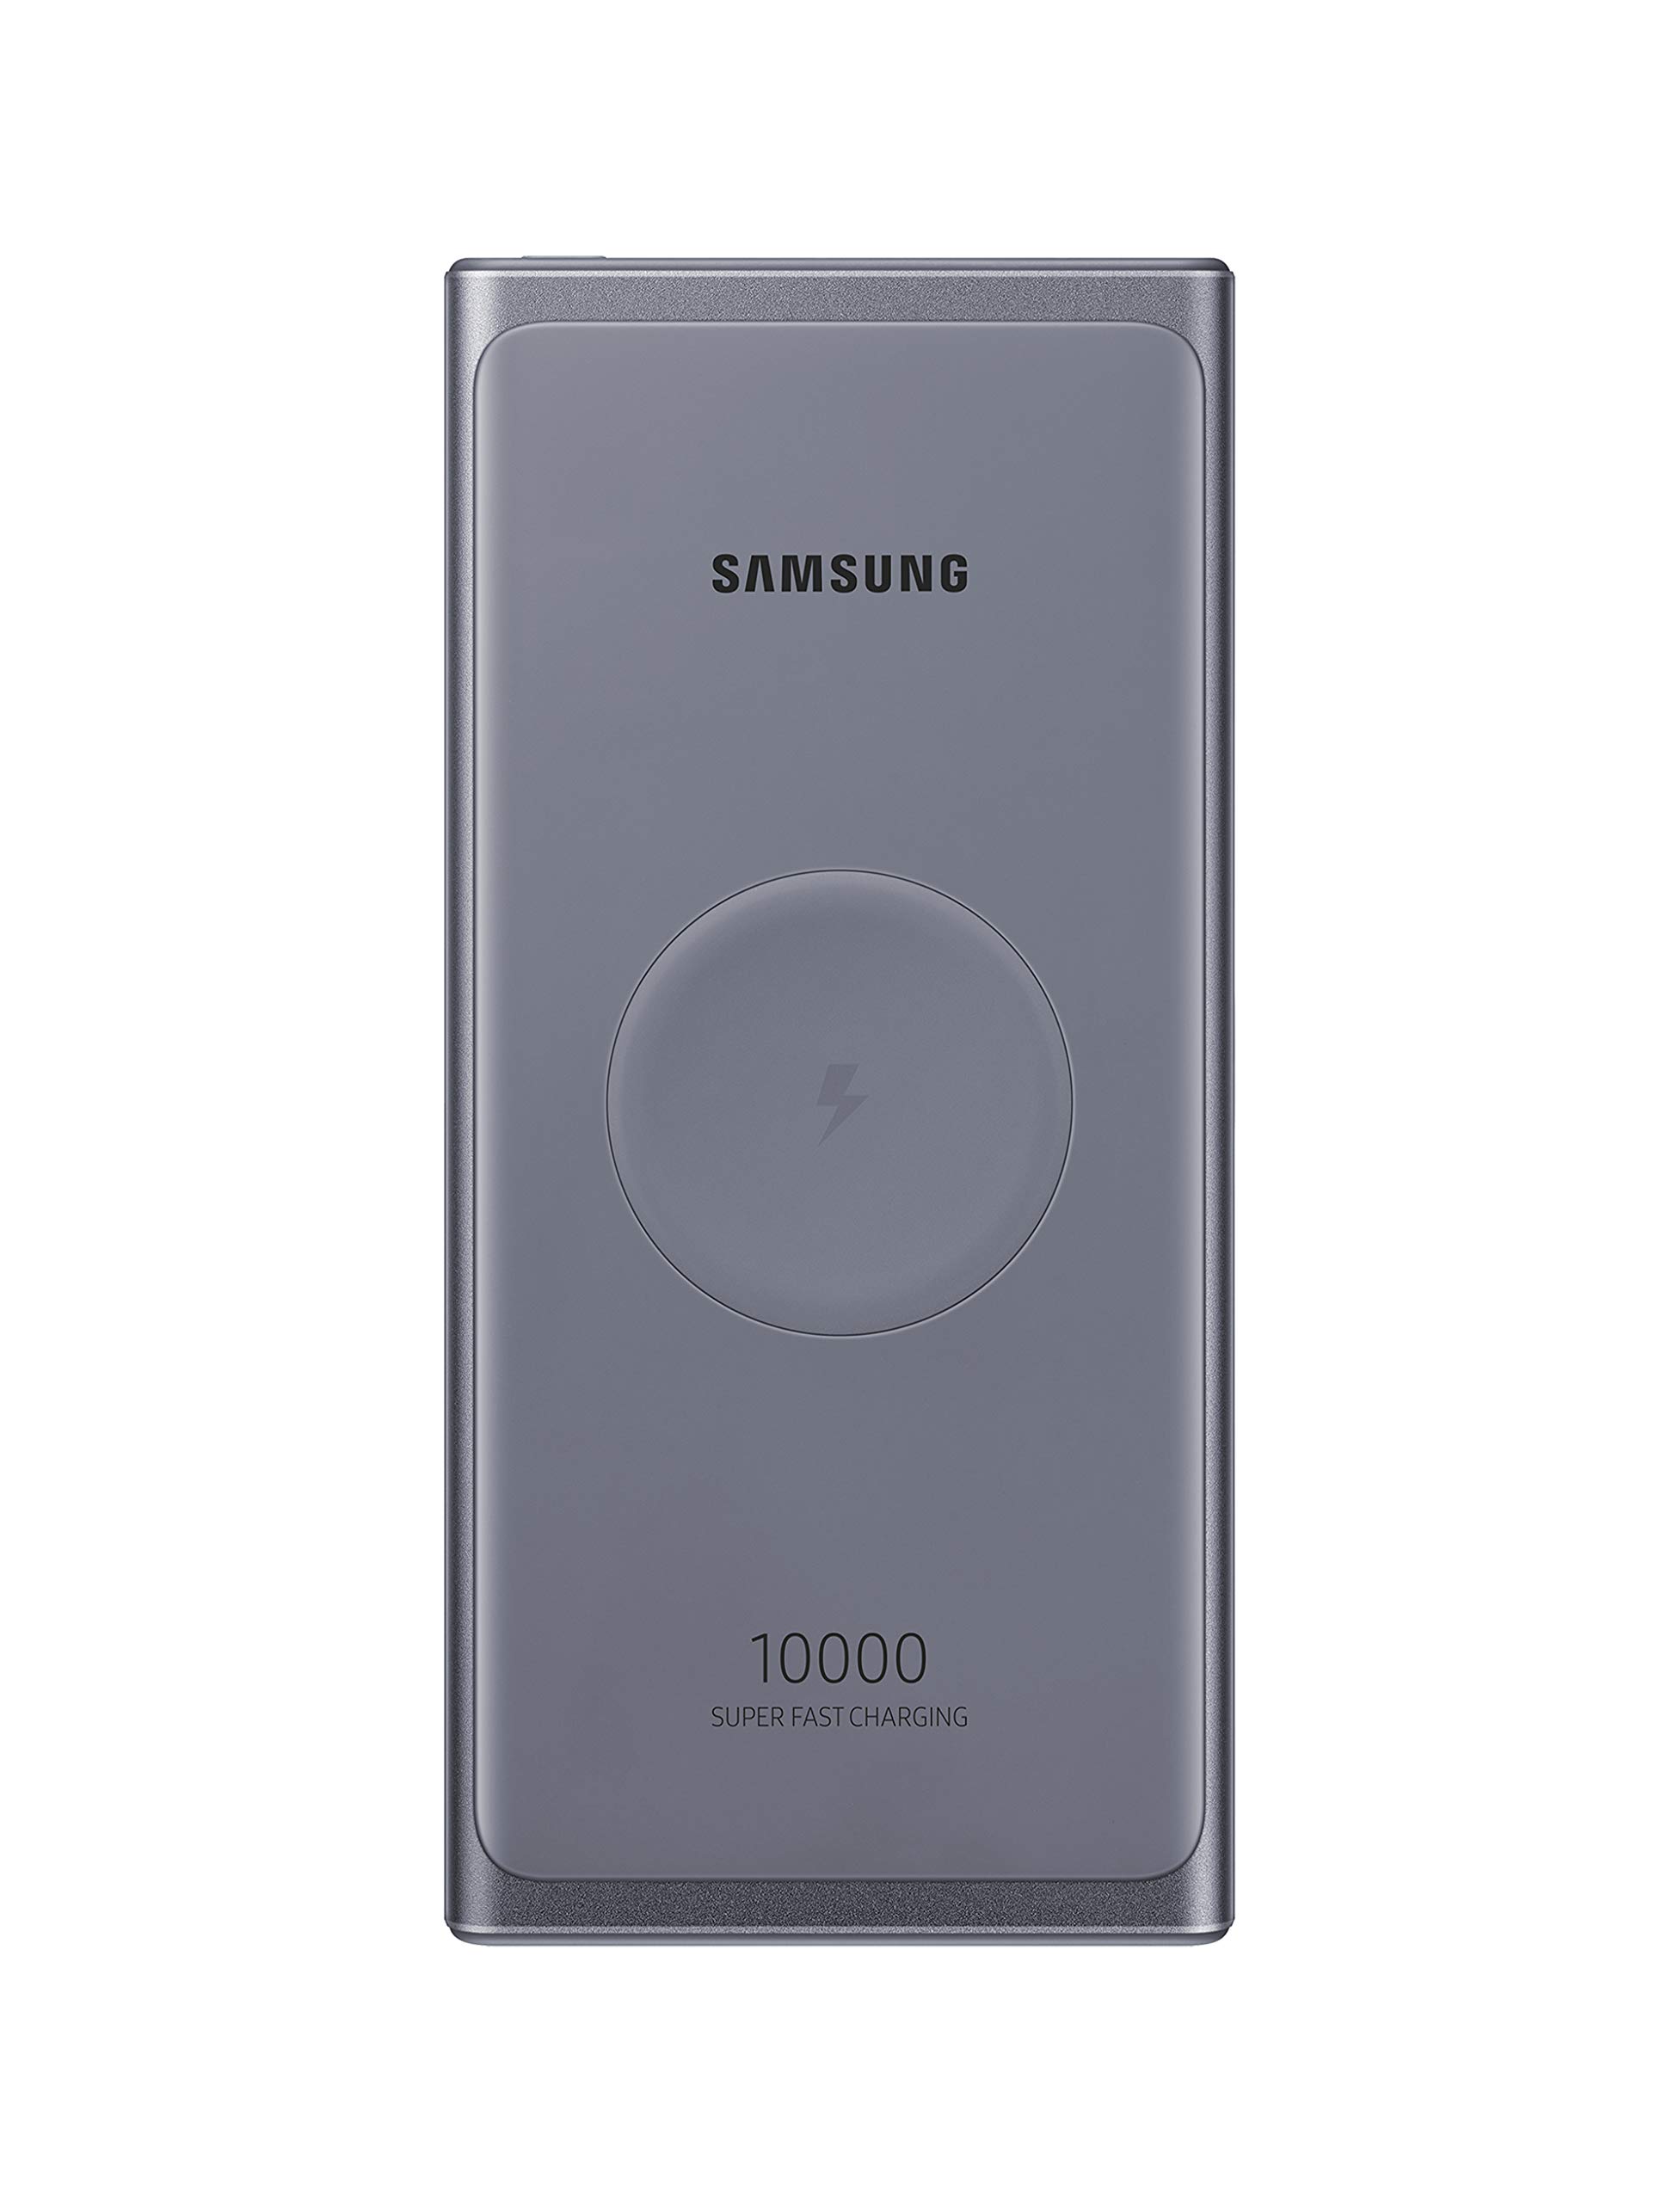 Introducir 55+ imagen samsung portable charger 10000